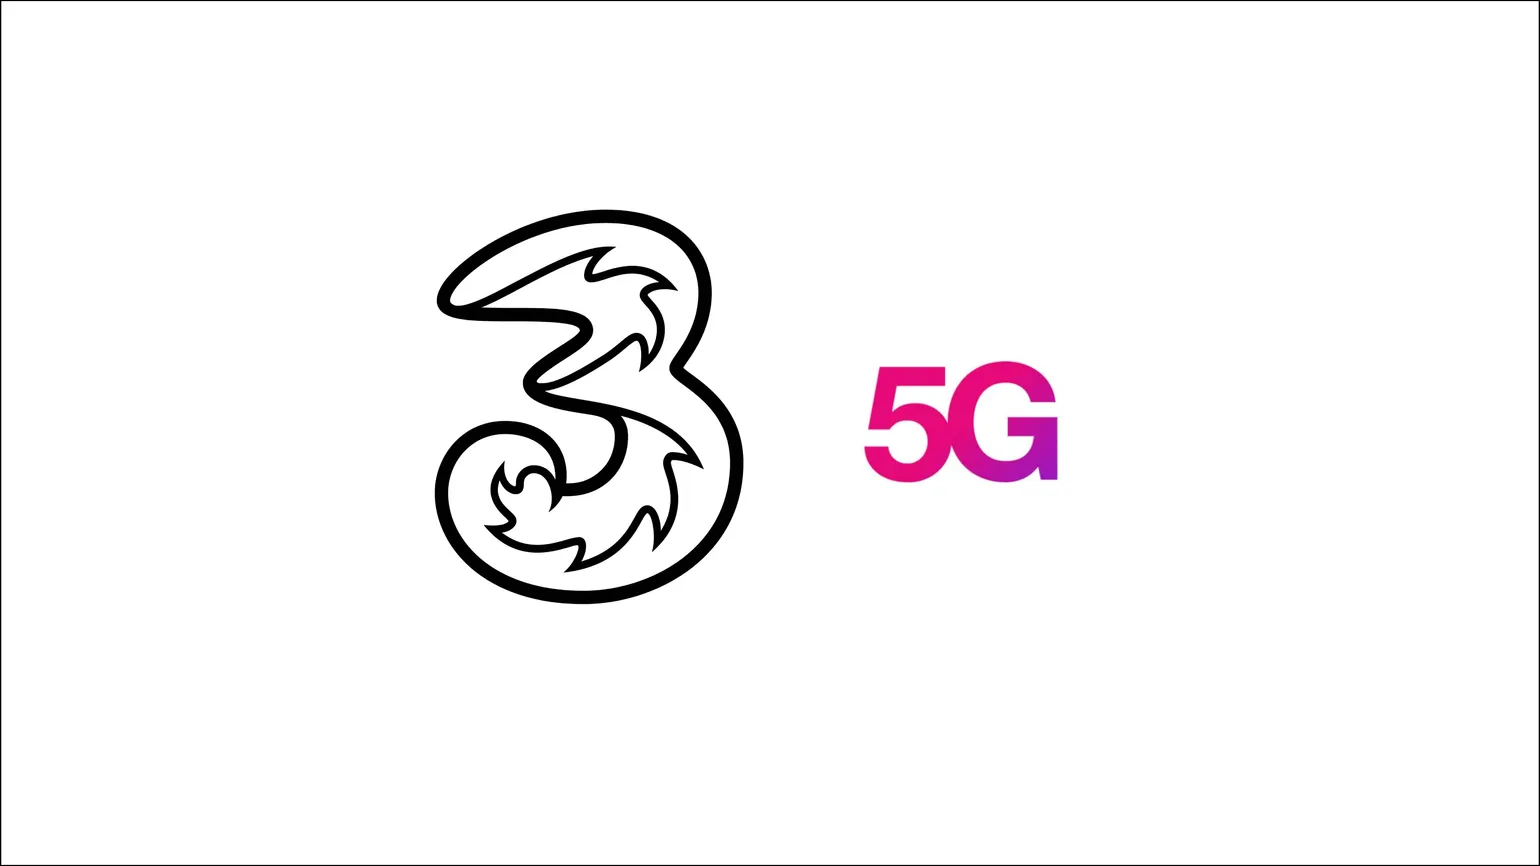 Three 5G roaming